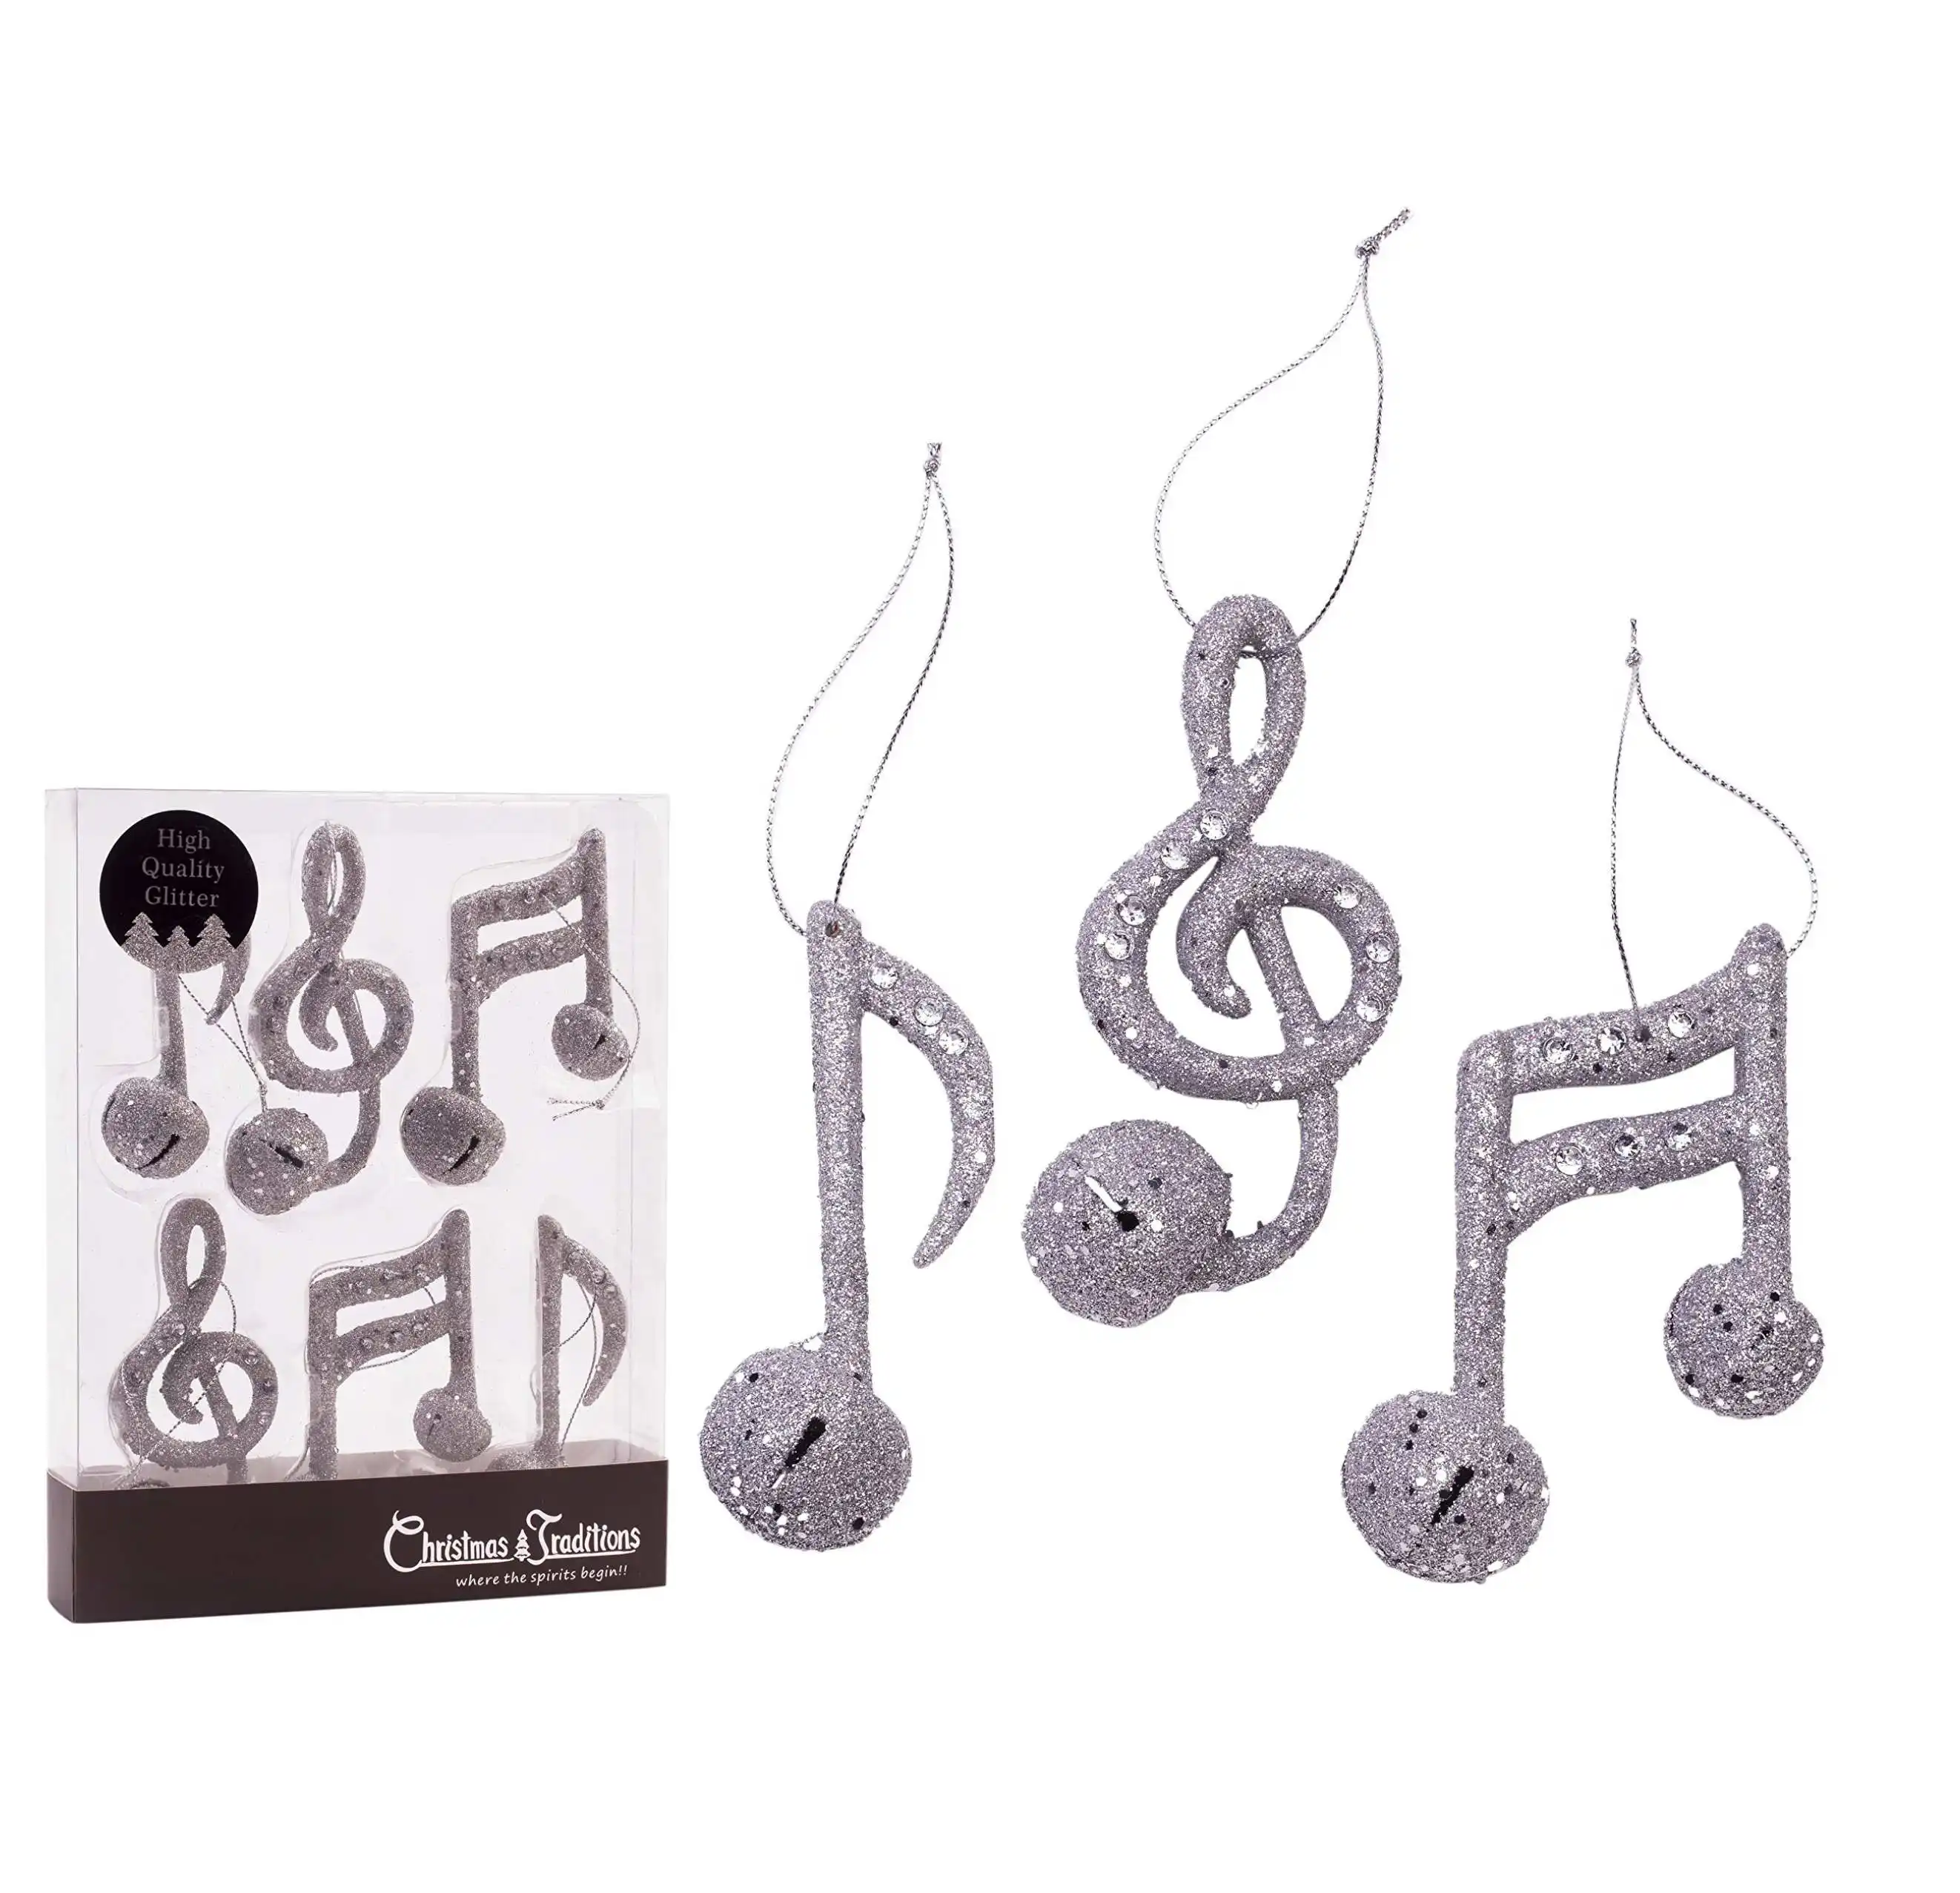 Atacado personalizado 4" prata brilhante natal pendurado ornamentos musicais notas musicais metal sino 3 estilos asst. (conjunto de 6)